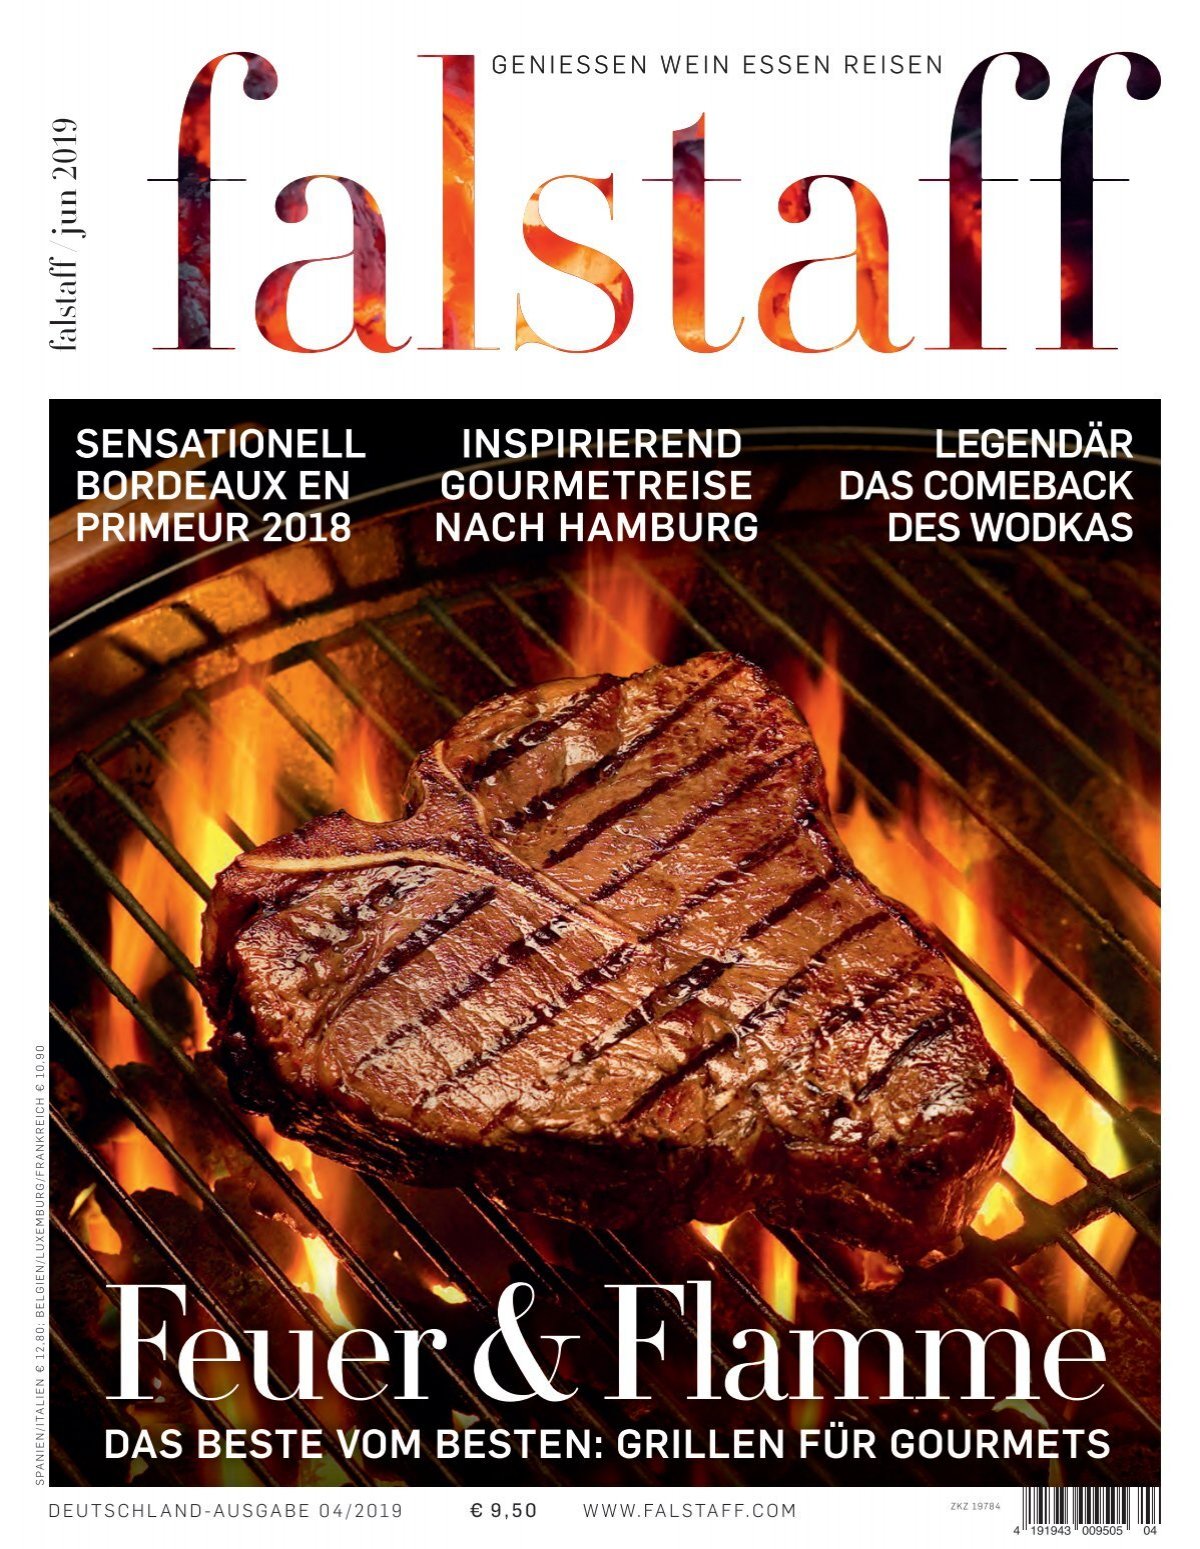 E-Paper | 04/2019 Deutschland Magazin Falstaff